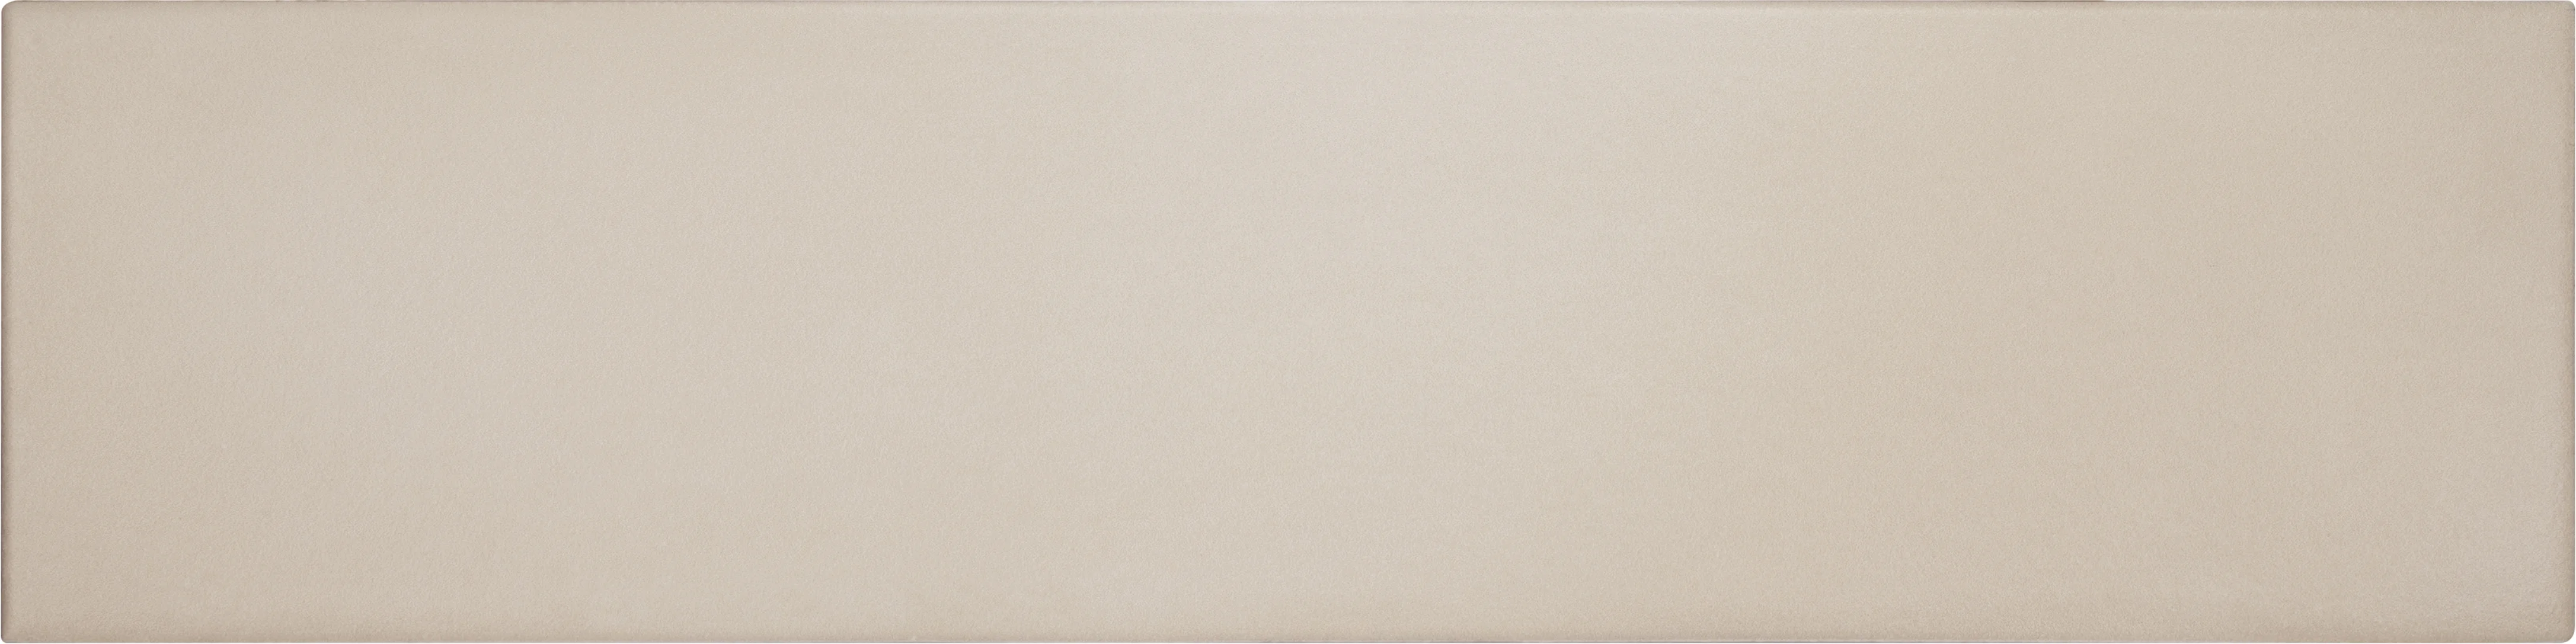 Equipe Stromboli Beige Gobi 9,2x36,8 cm 